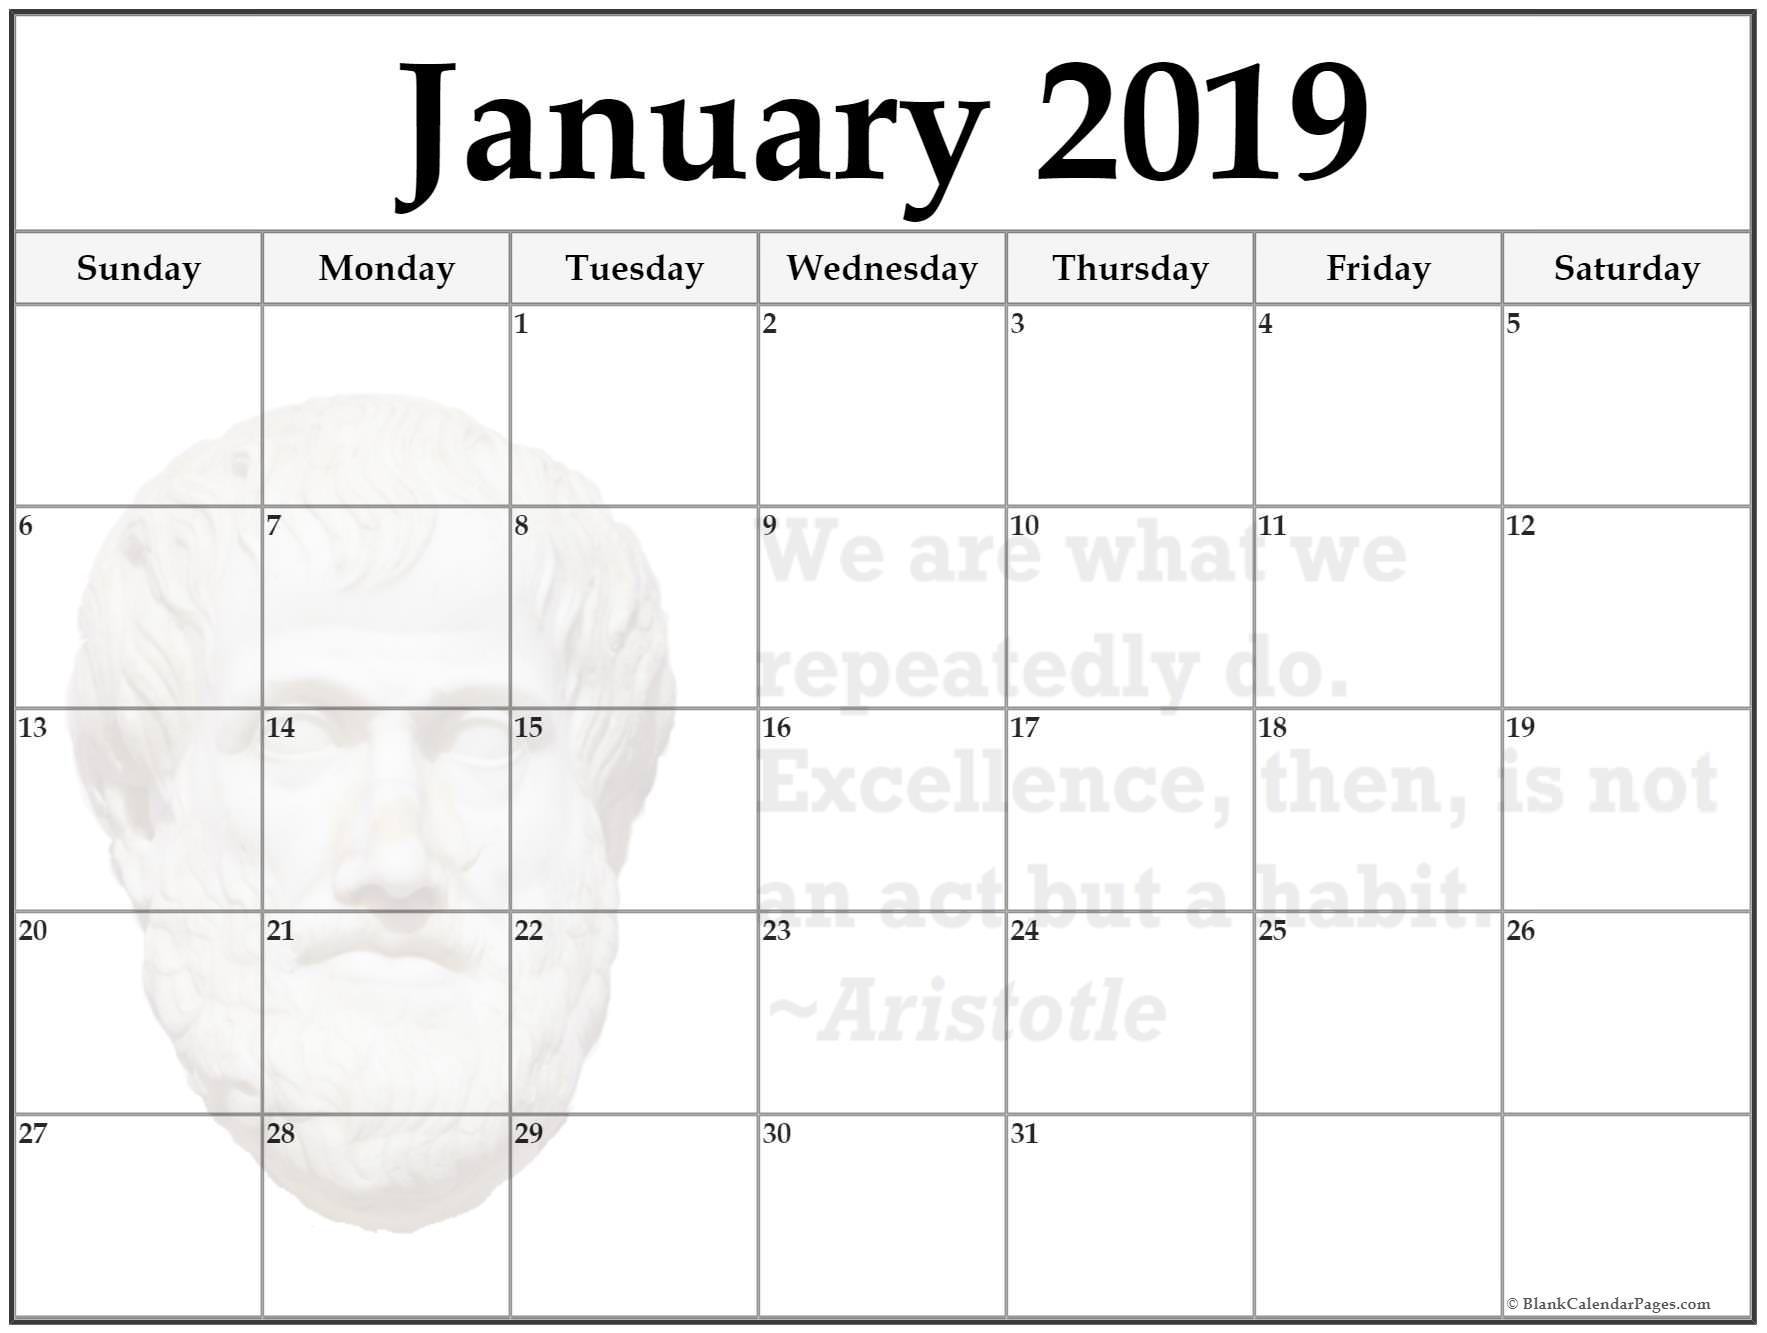 Download January 2019 Blank Calendar Template